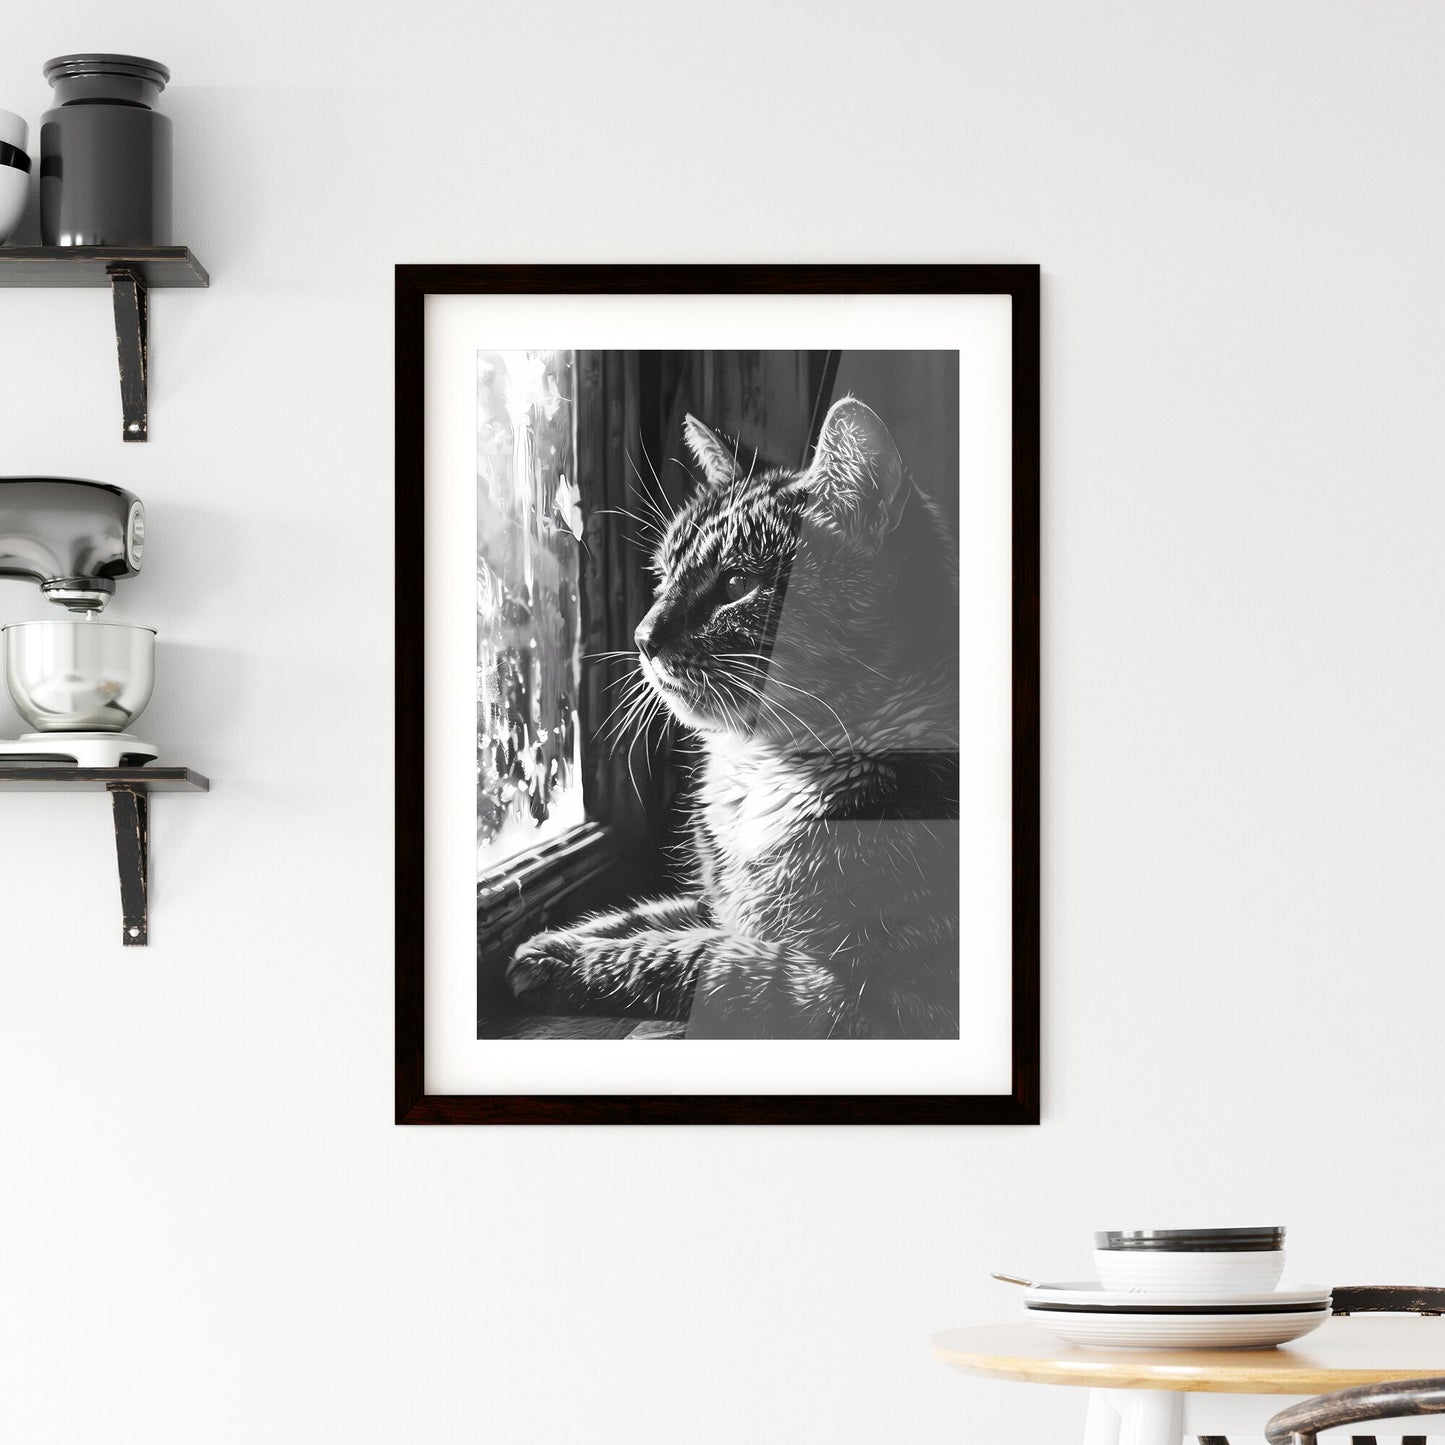 A Poster of linocut cat folk art - A Cat Sitting In A Window Default Title